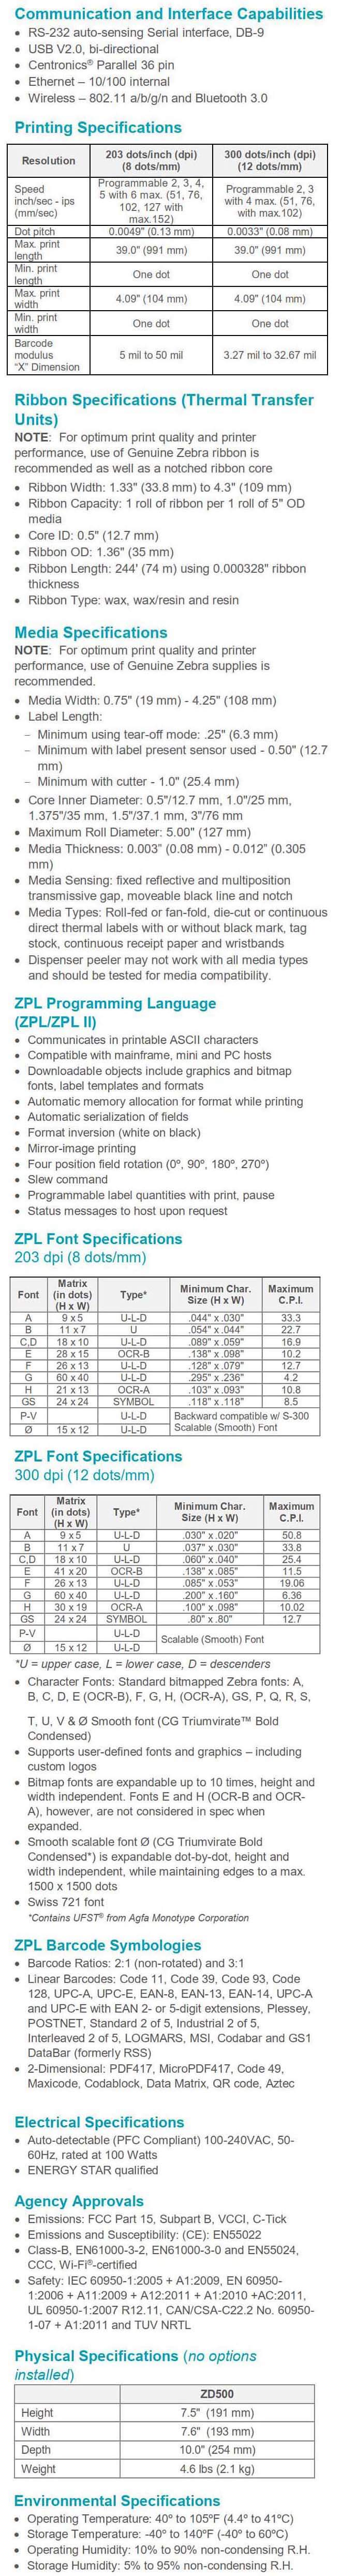 Ficha técnica de la impresora de escritorio Zebra ZD500